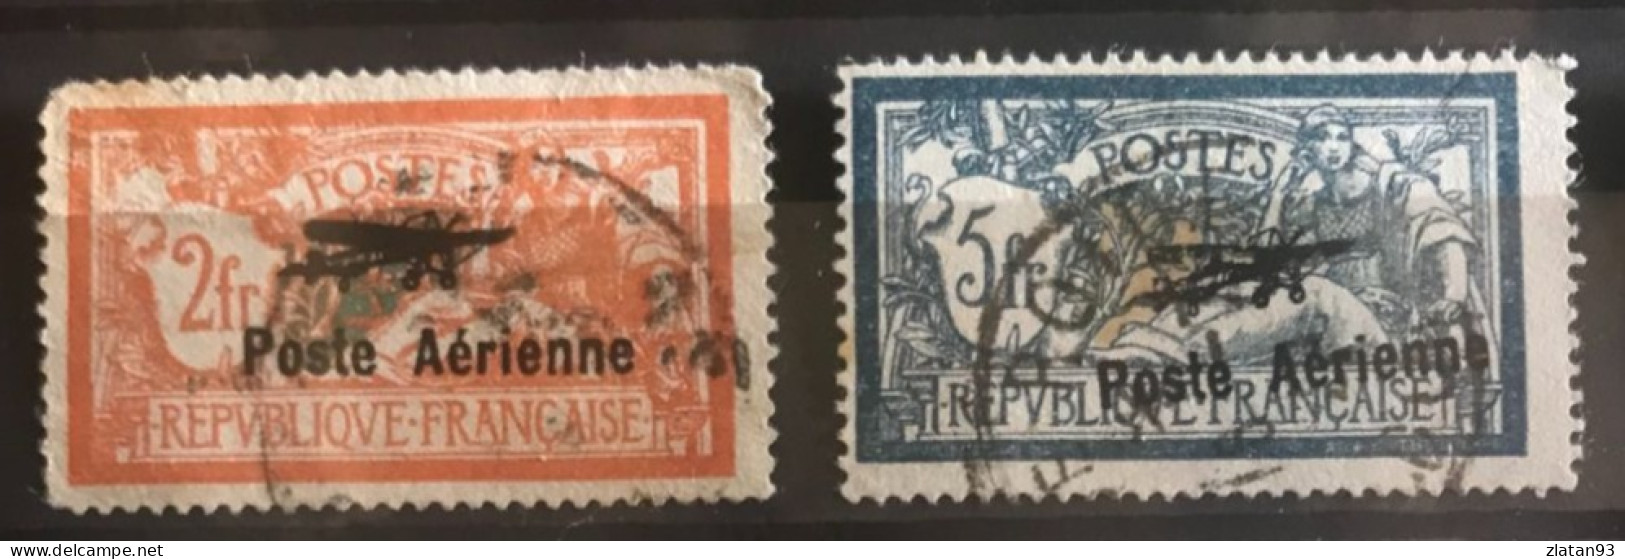 POSTE AERIENNE N°1 & N°2 Oblitéré CàD (SURCHARGE MODERNE) - 1927-1959 Used